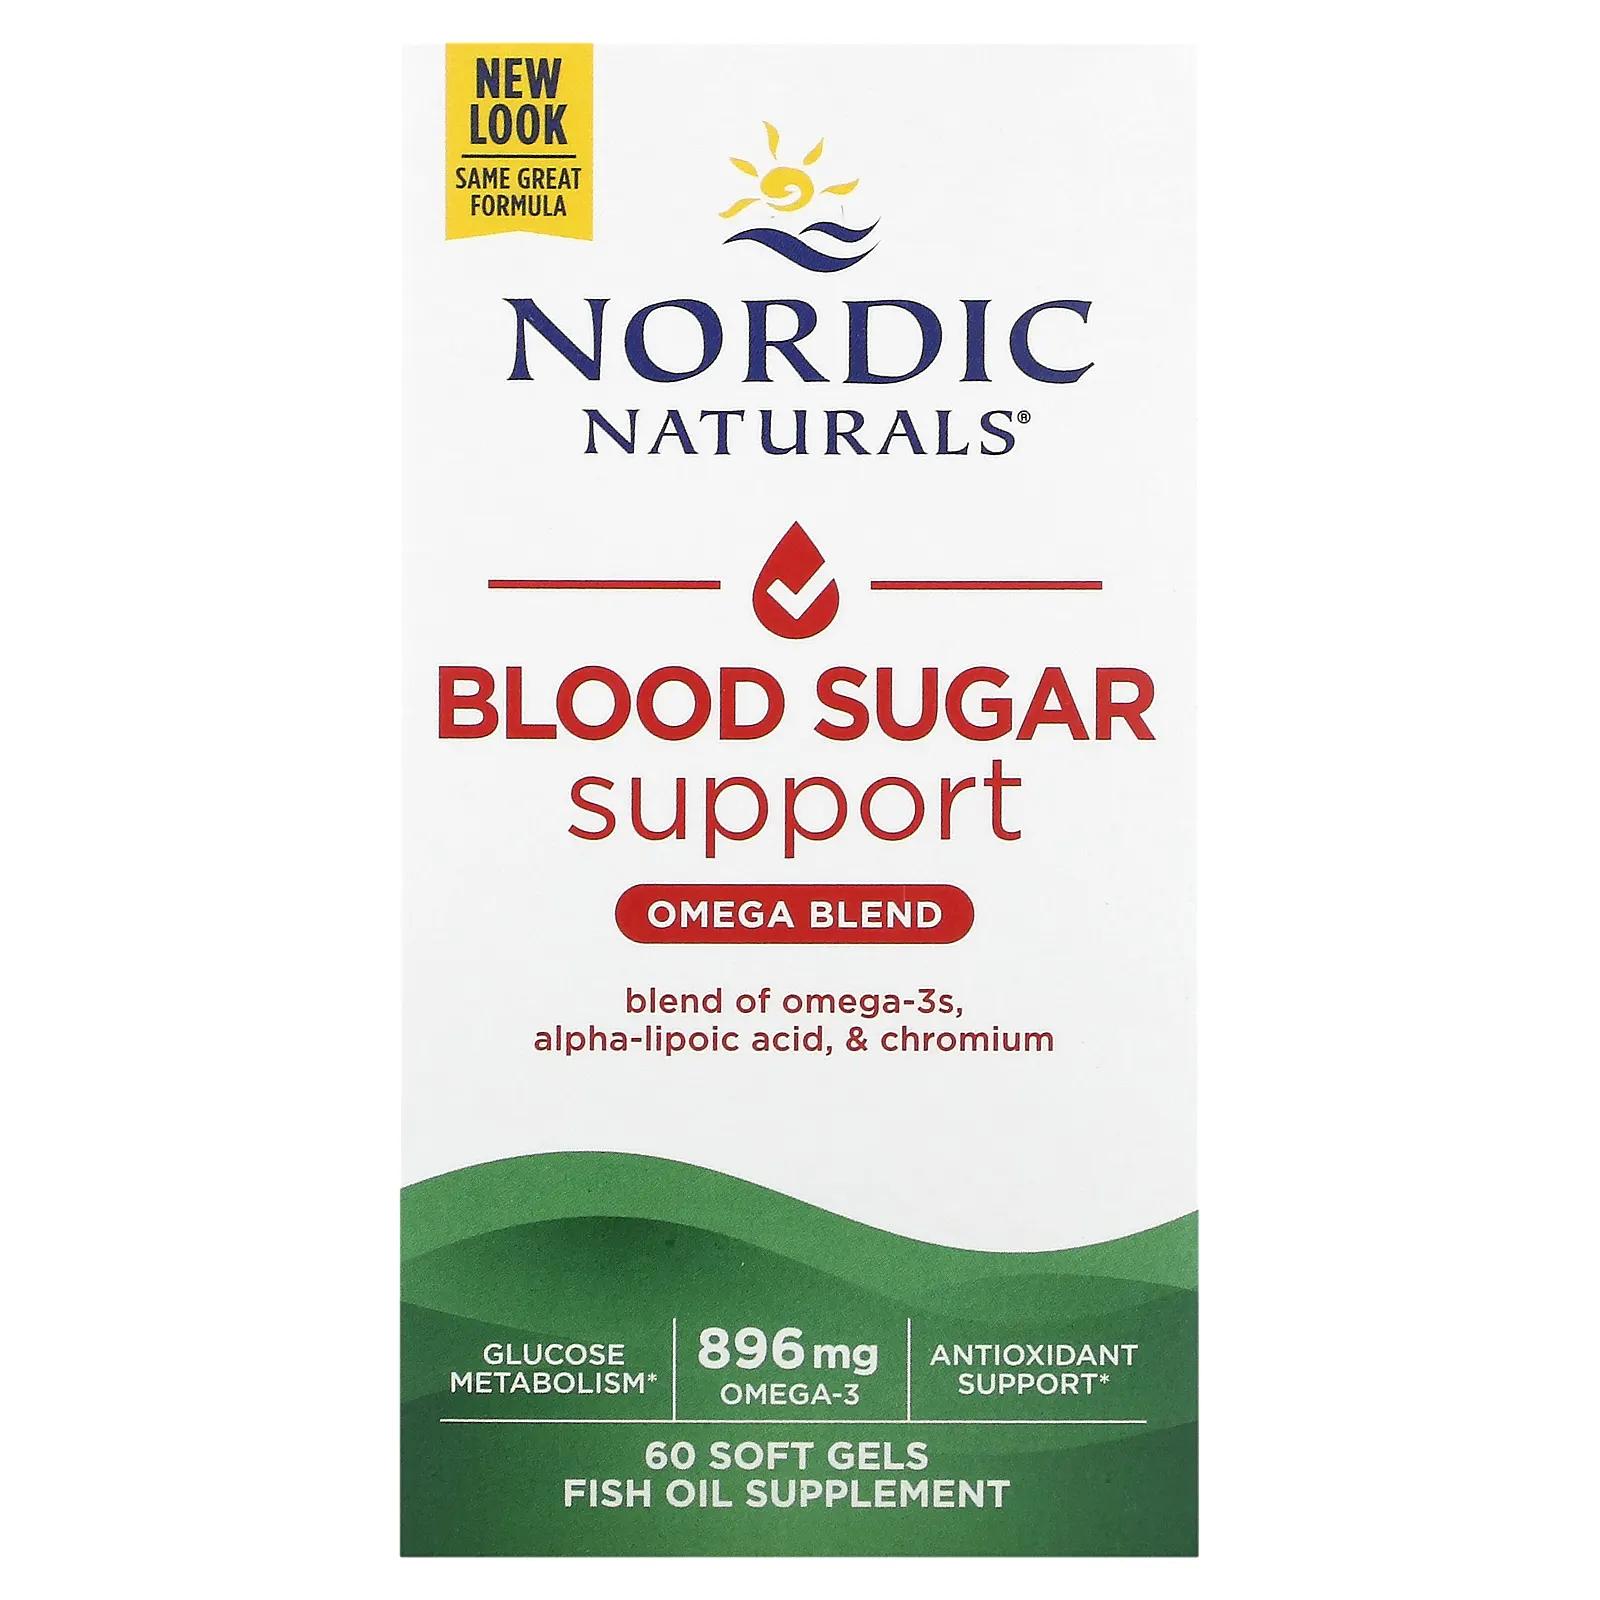 Nordic Naturals Omega Blood Sugar 1000 мг 60 мягких таблеток nordic naturals vision support omega blend 1460 мг 60 мягких таблеток 730 мг на мягкую гель